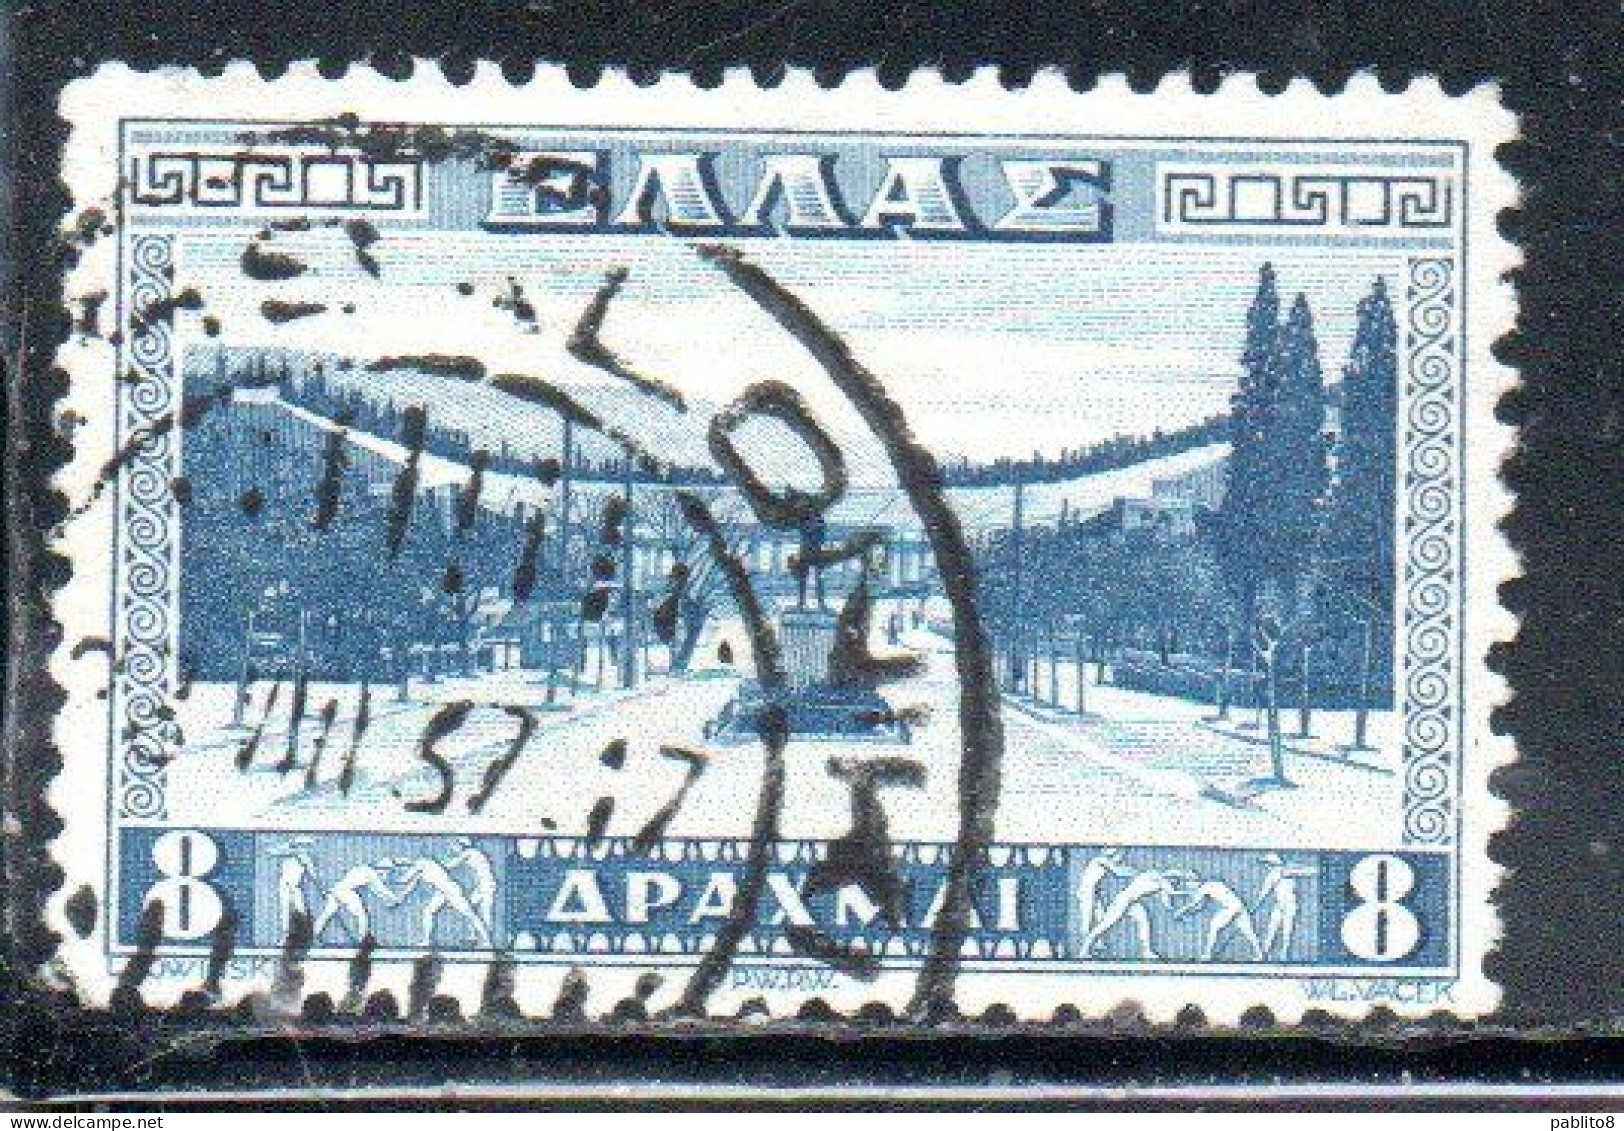 GREECE GRECIA HELLAS 1934 APPROACH TO ATHENS STADIUM 8d USED USATO OBLITERE' - Usati